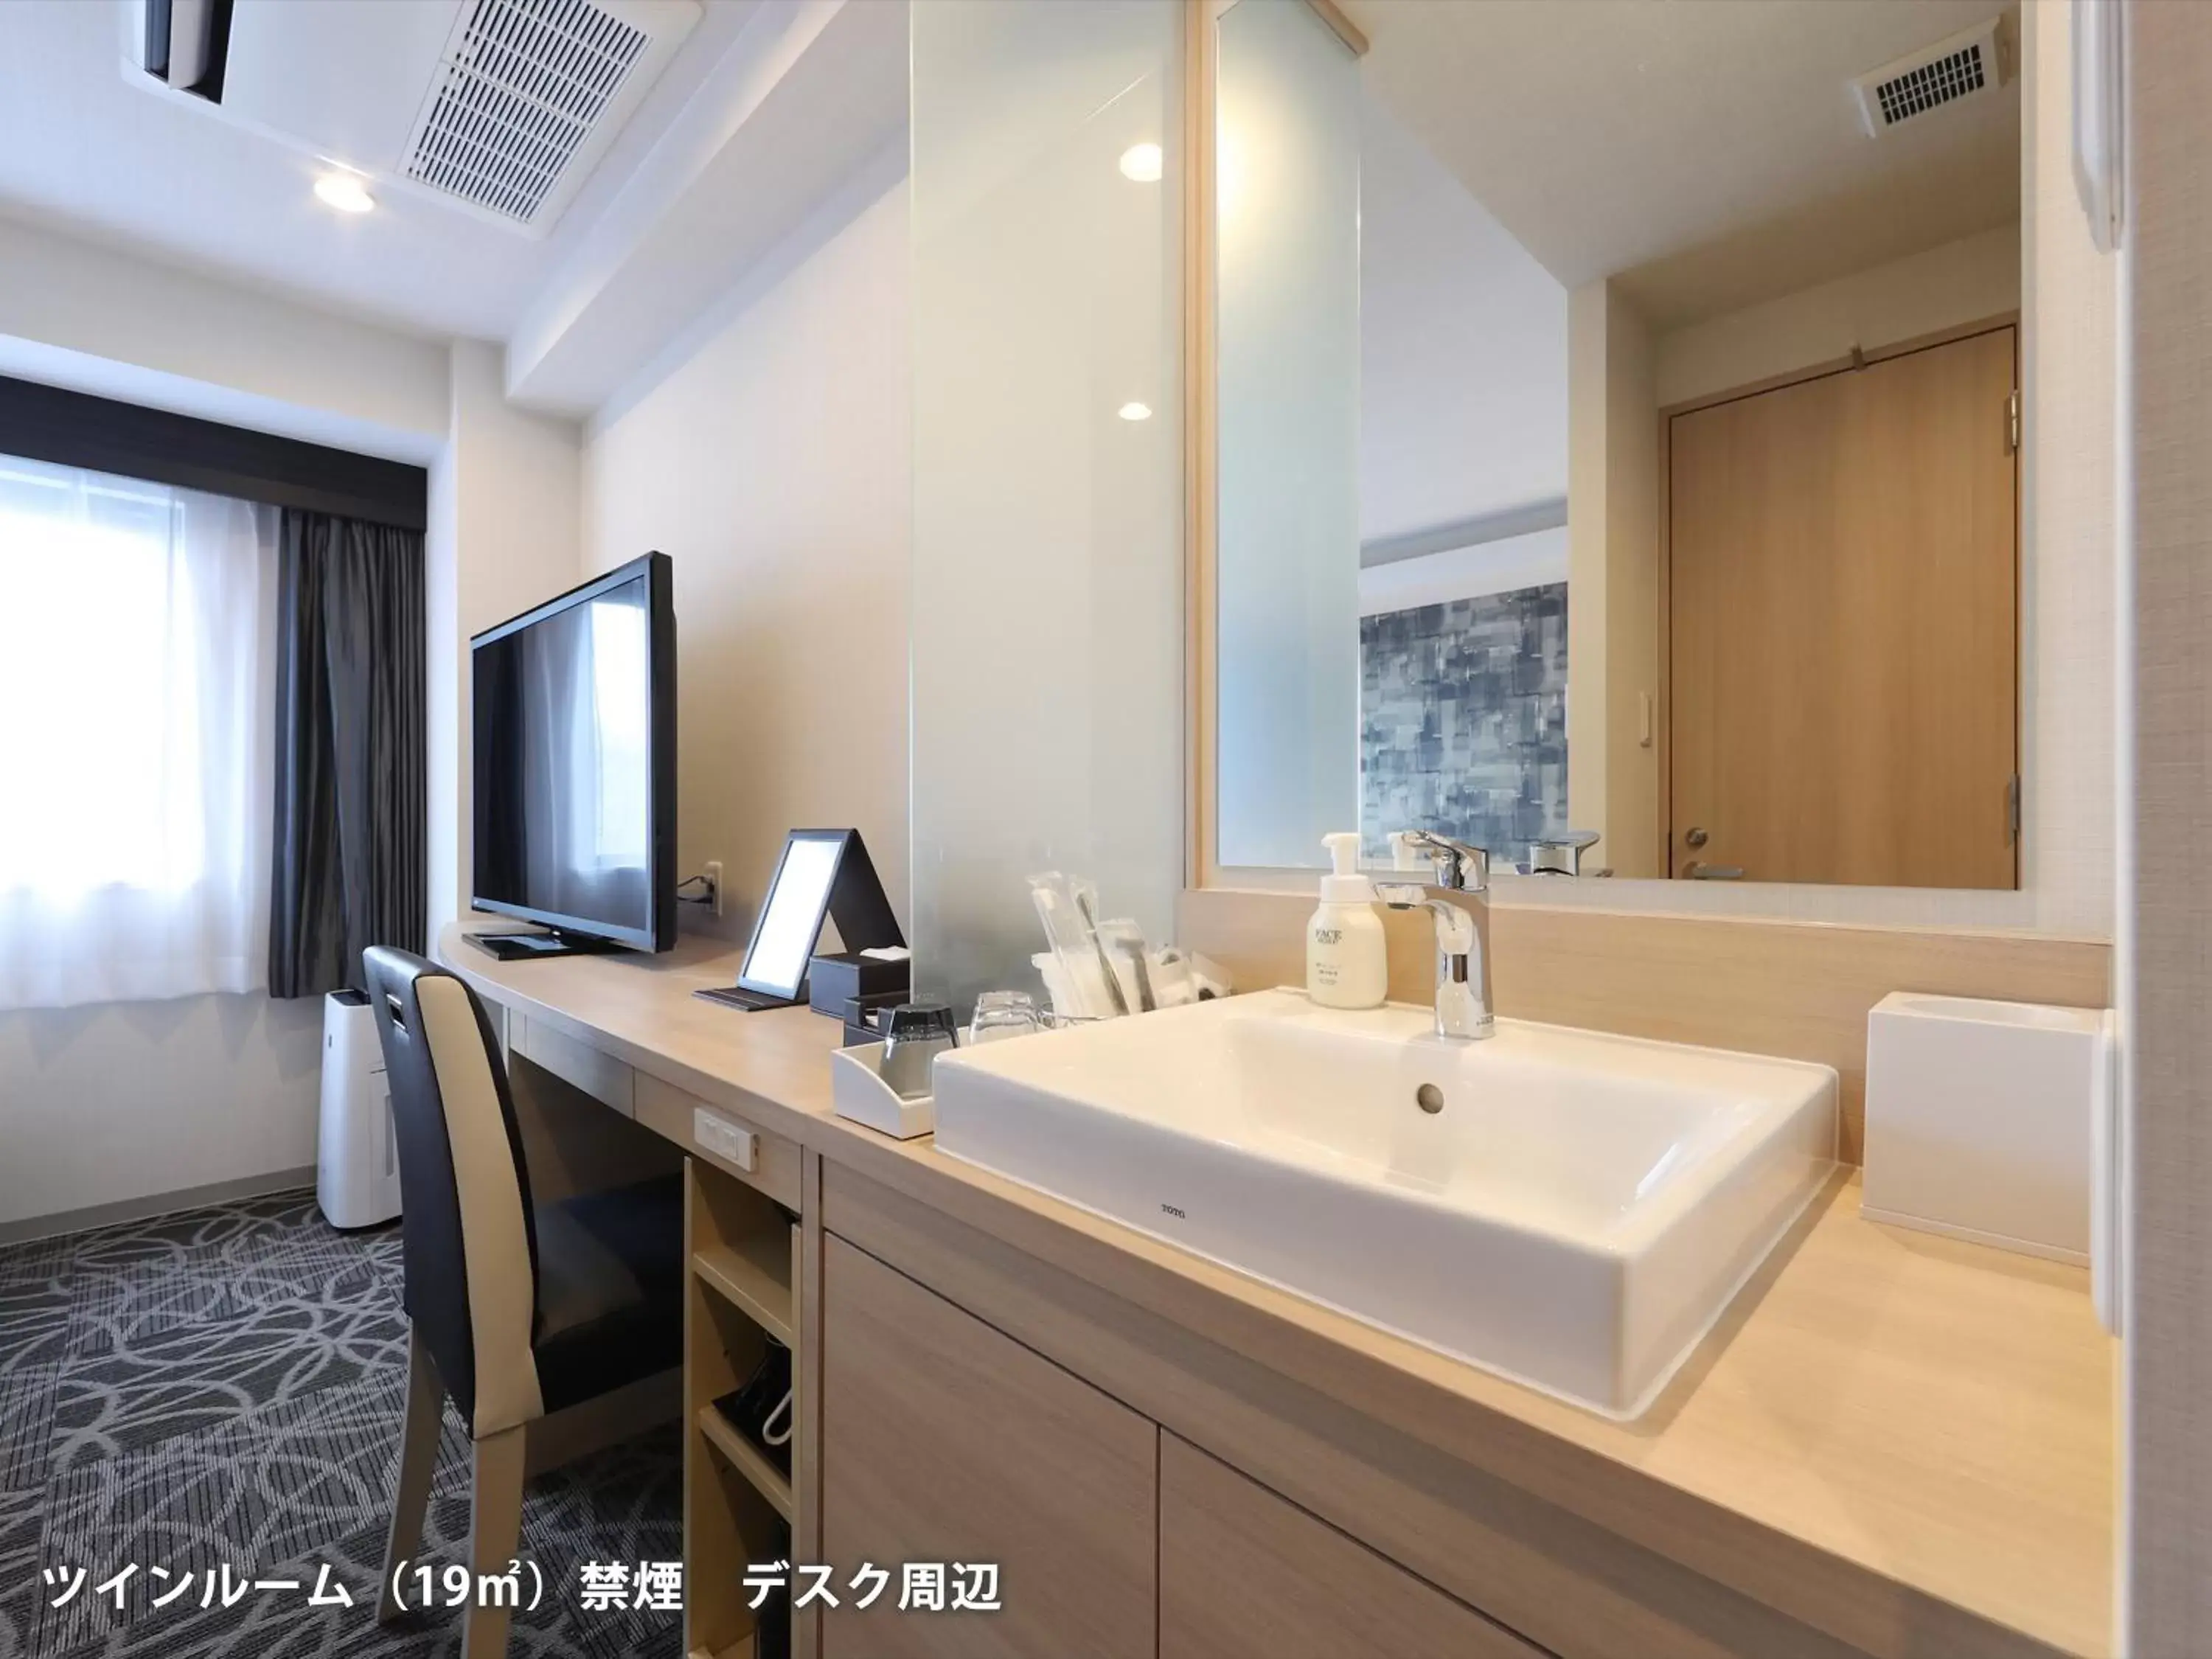 Photo of the whole room in Hotel Actel Nagoya Nishiki